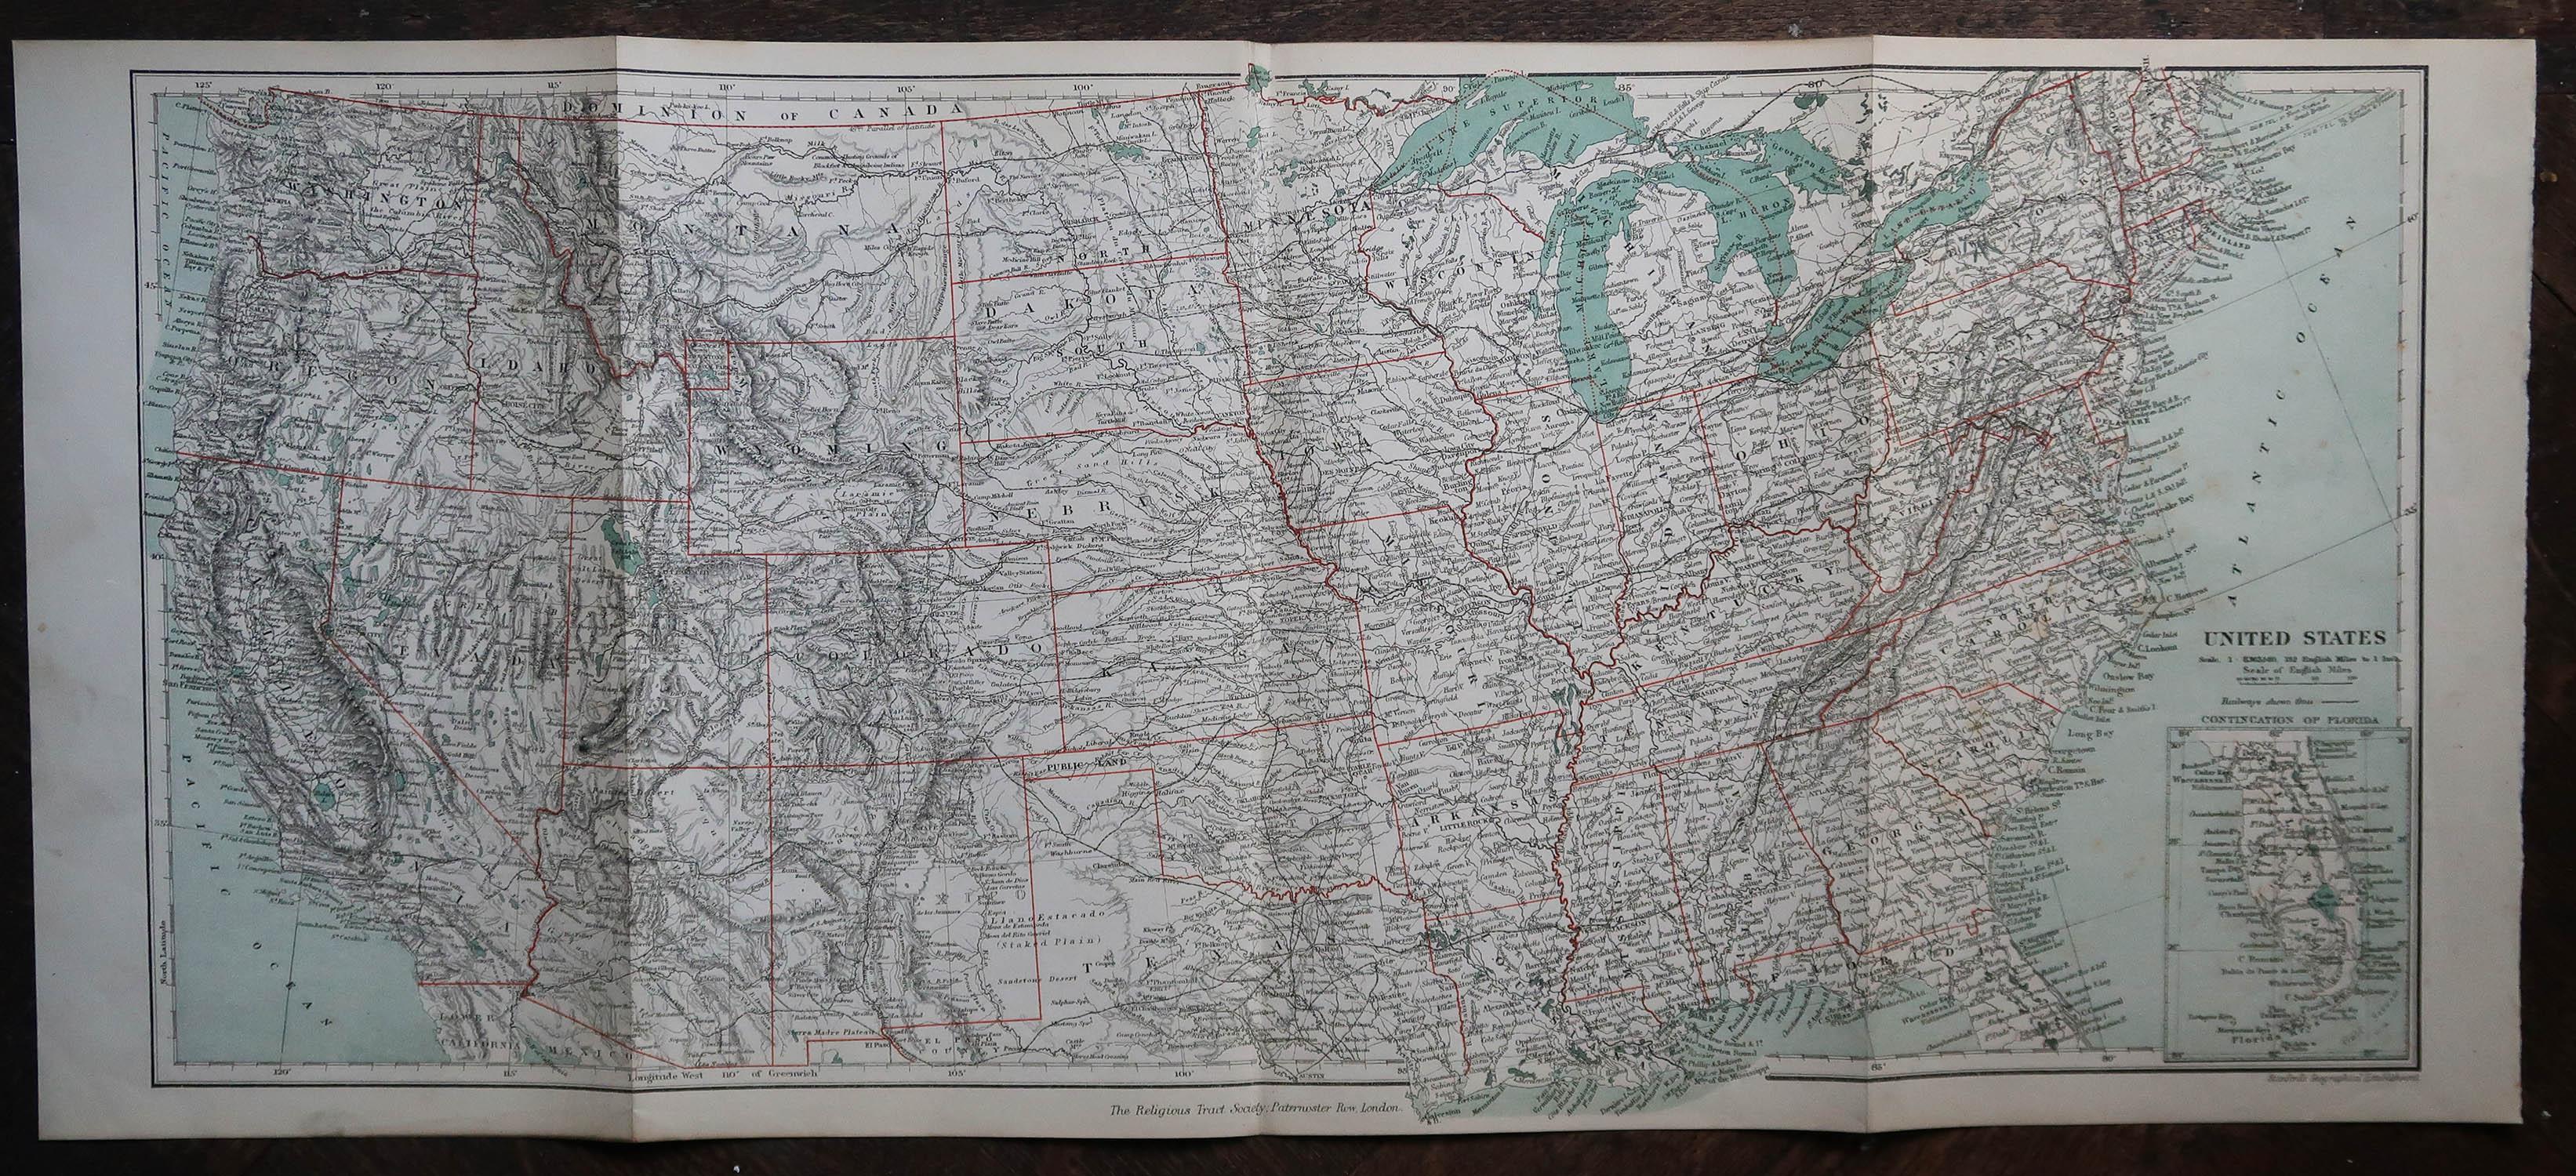 mapa antiguo de estados unidos